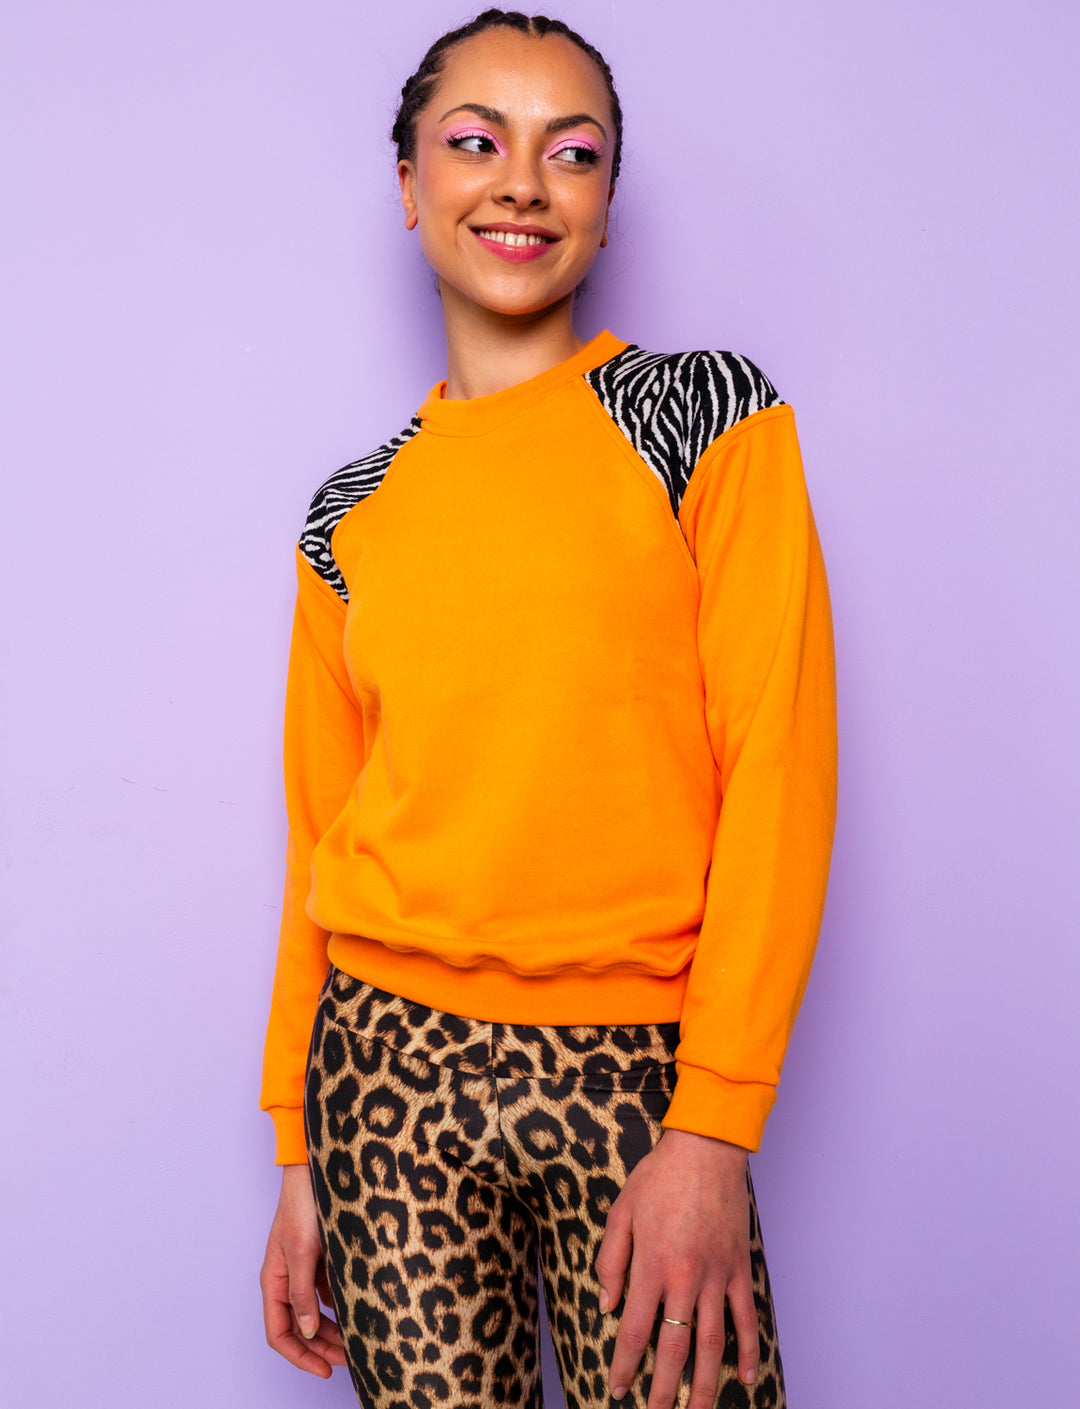 woman wearing orange sweatshirt with zebra print shoulders